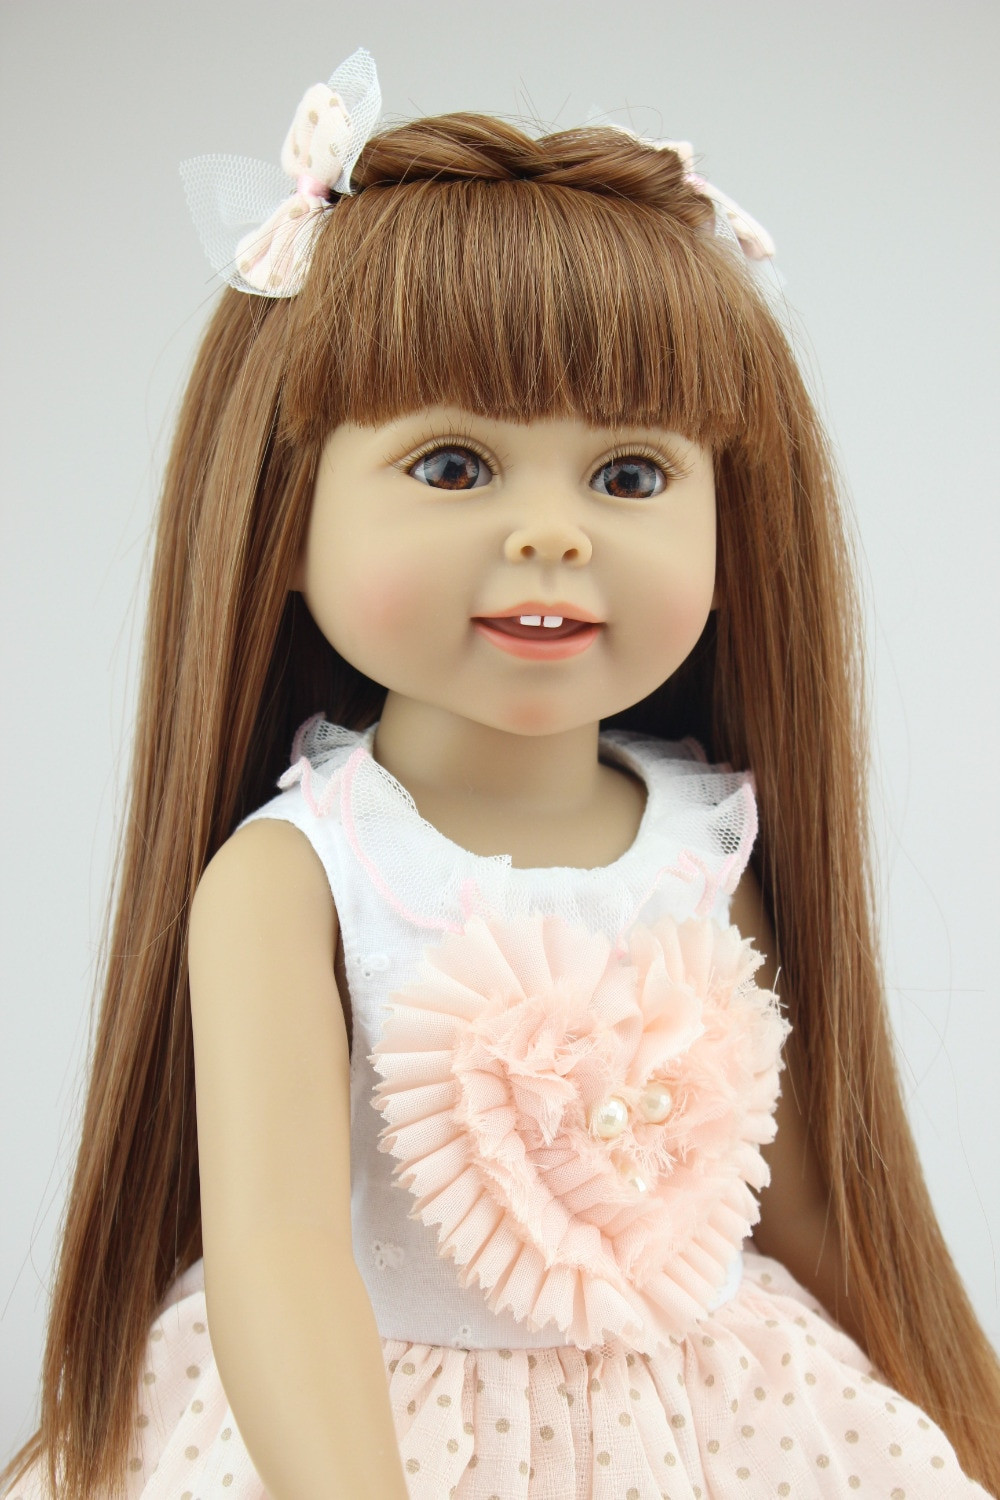 Newborn Baby Dolls With Hair
 AMERICAN PRINCESS 18 45CM GIRL Brown Long Hair Pink Cute